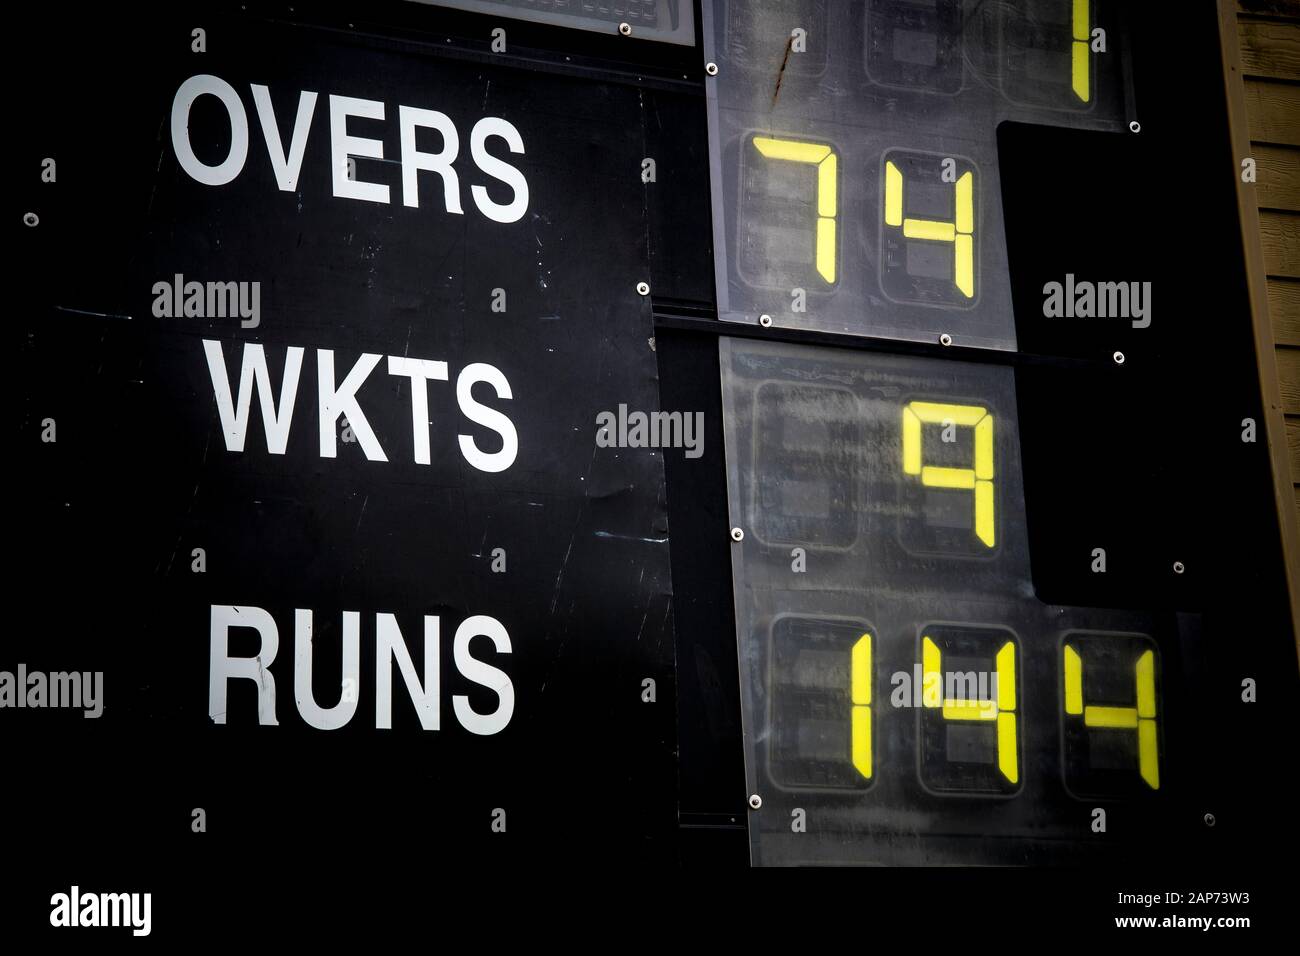 Cricket scoreboard showing wickets and runs scored Stock Photo